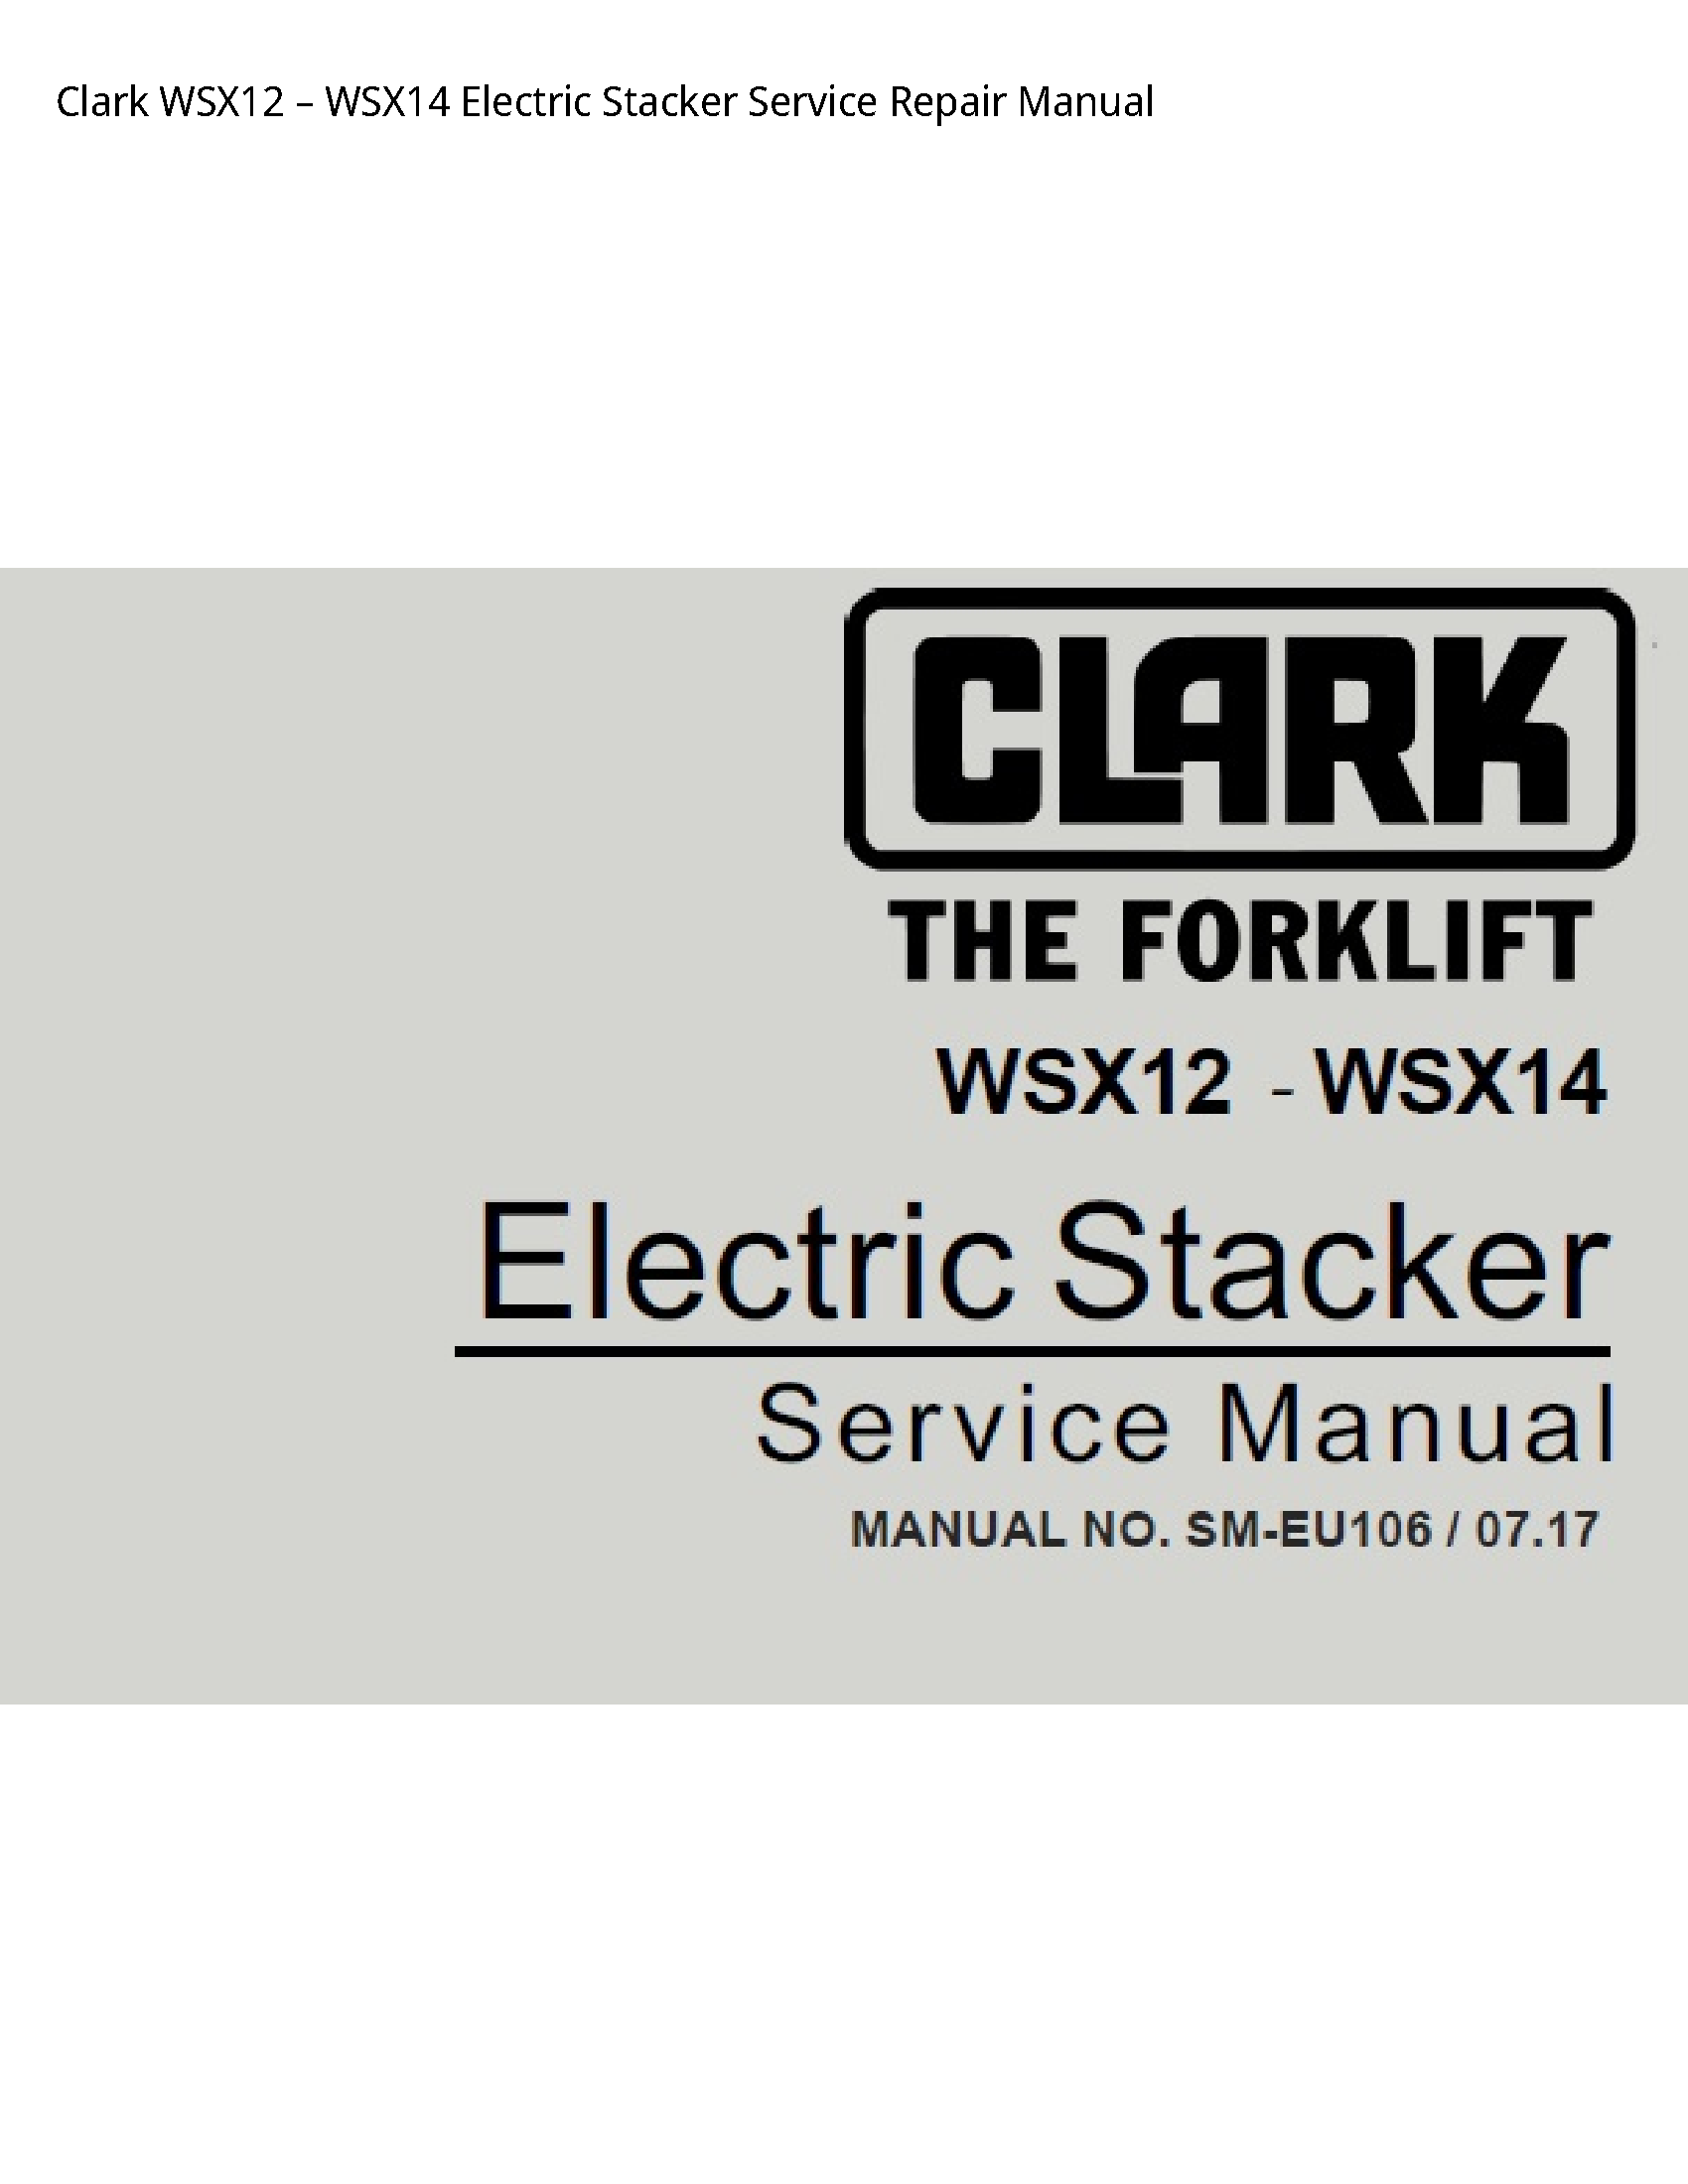 Clark WSX12 Electric Stacker manual